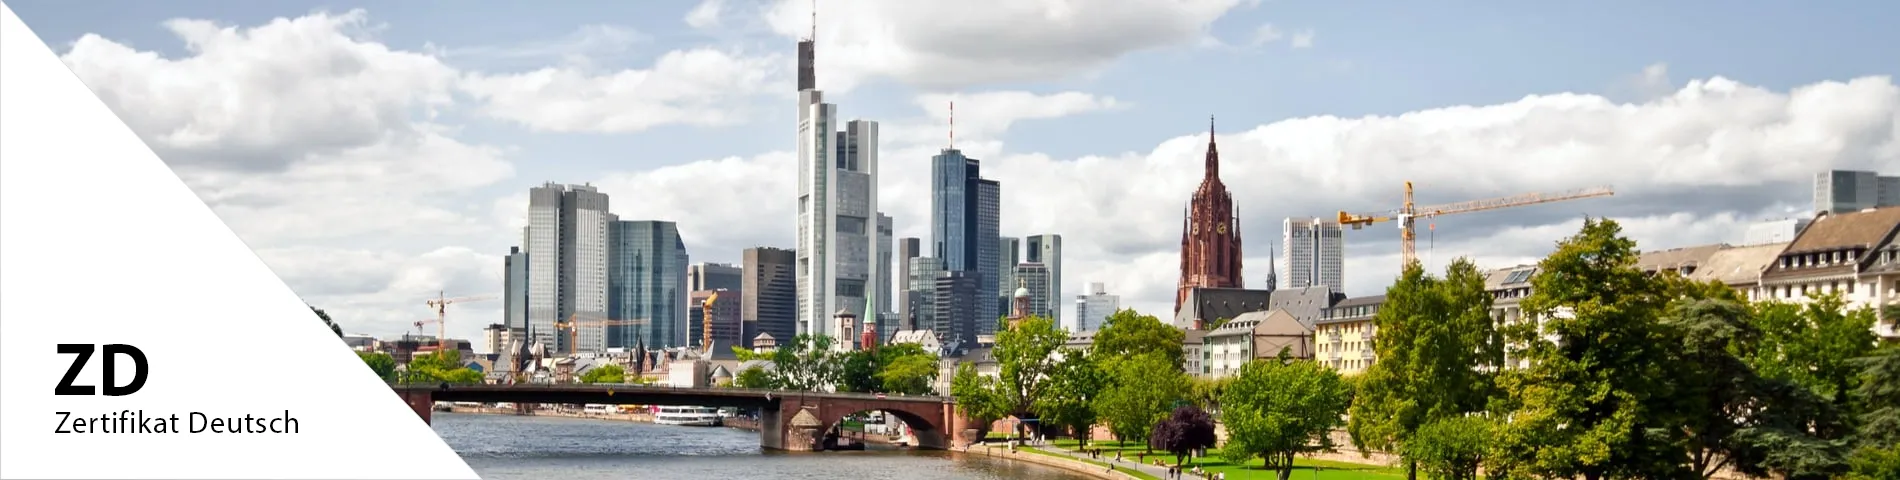 Frankfurt - Zertifikat Deutsch (ZD)